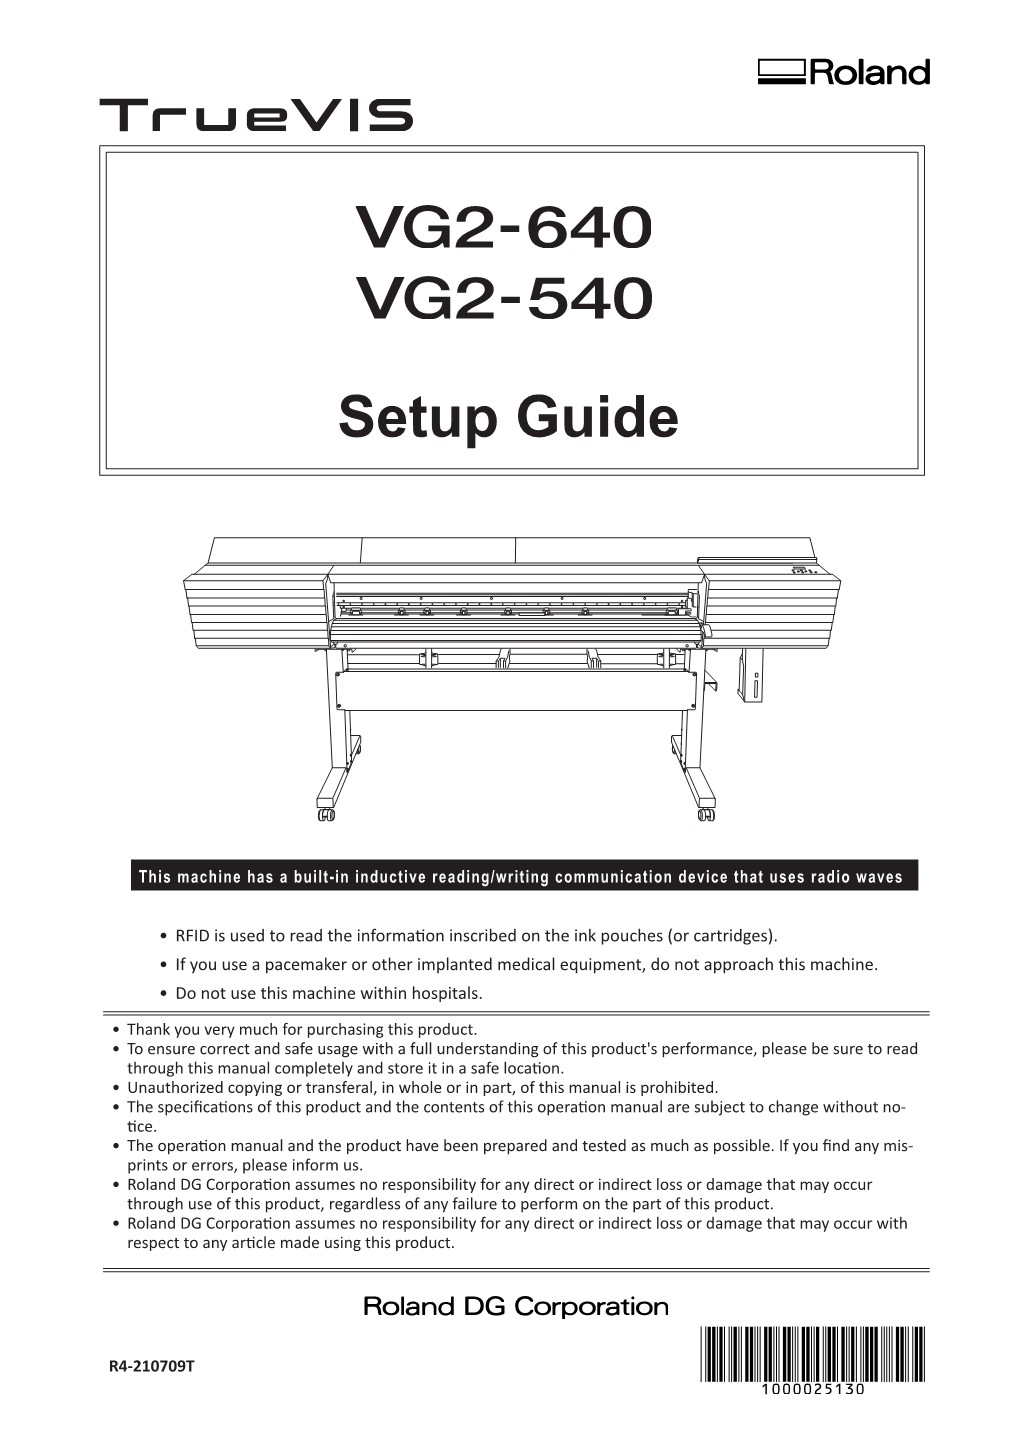 VG2-640/540 Setup Guide